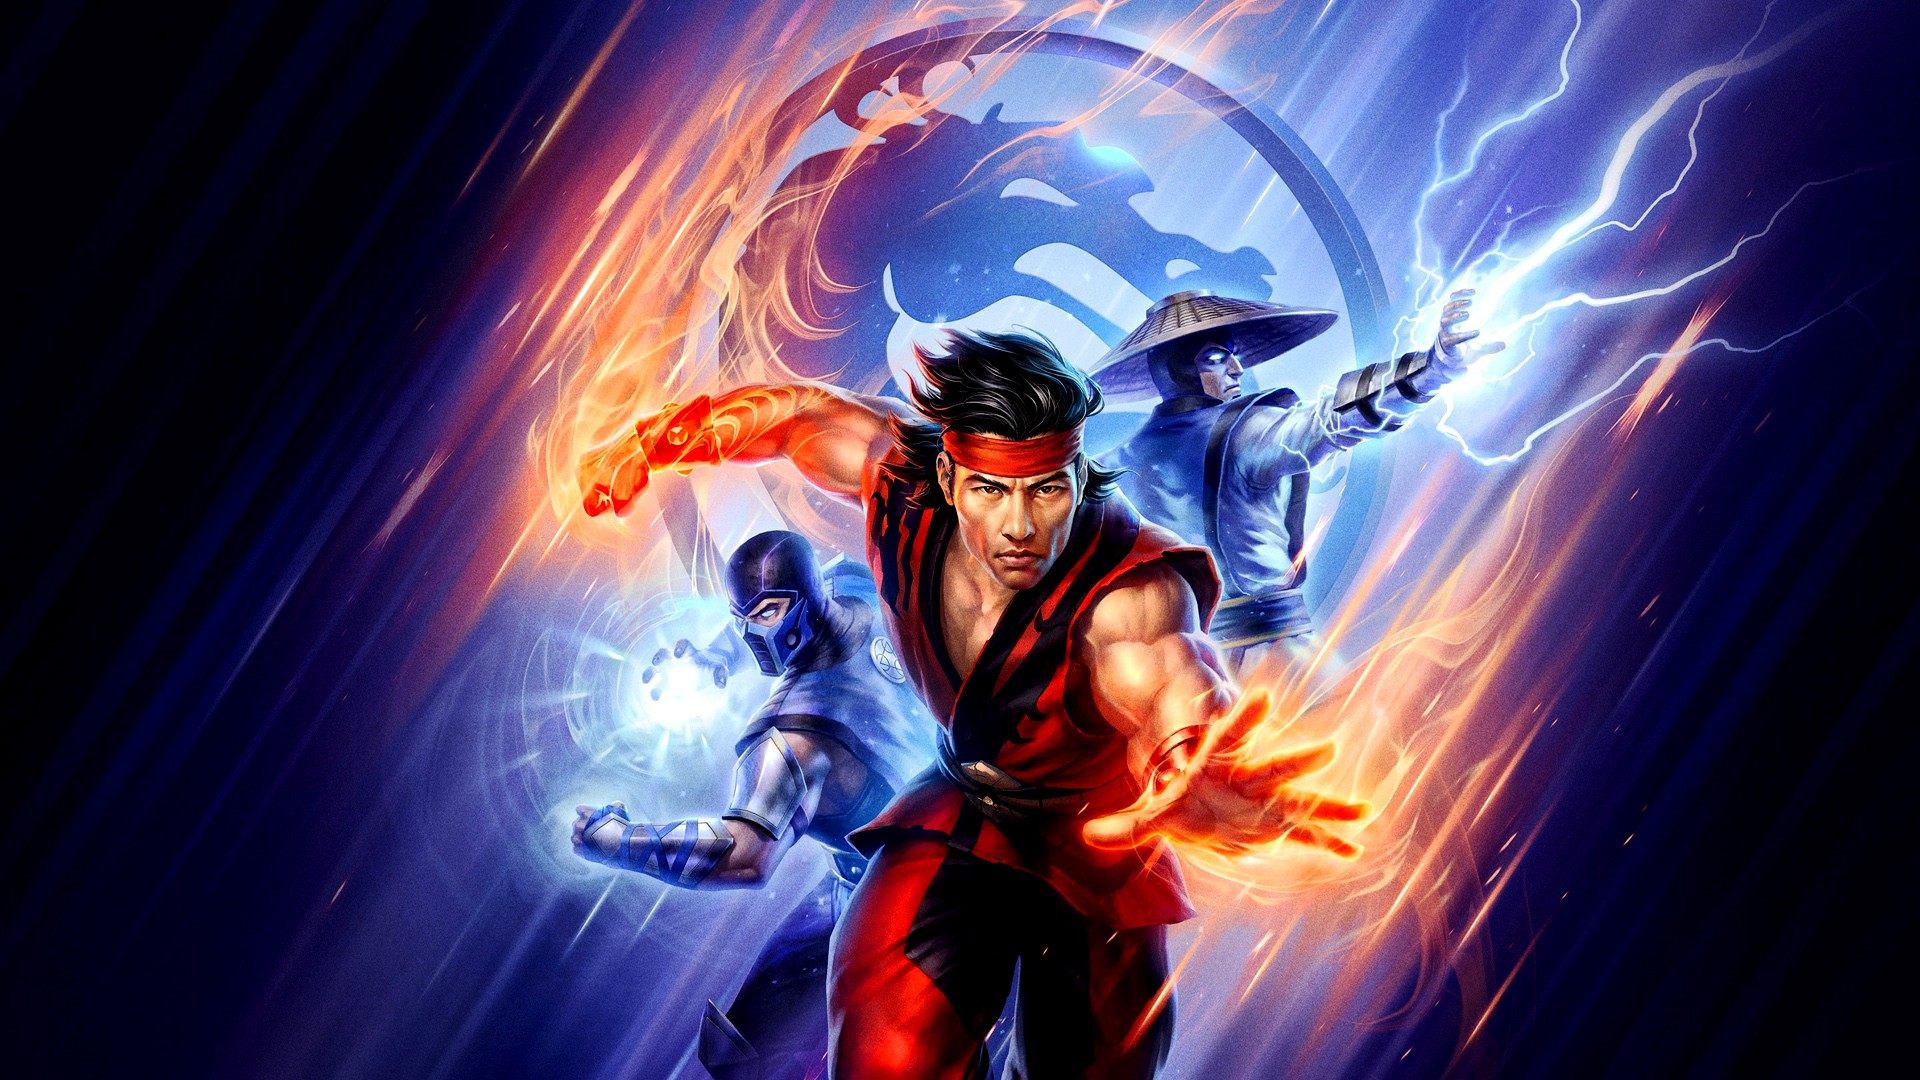 Mortal Kombat Legends: Battle of the Realms background